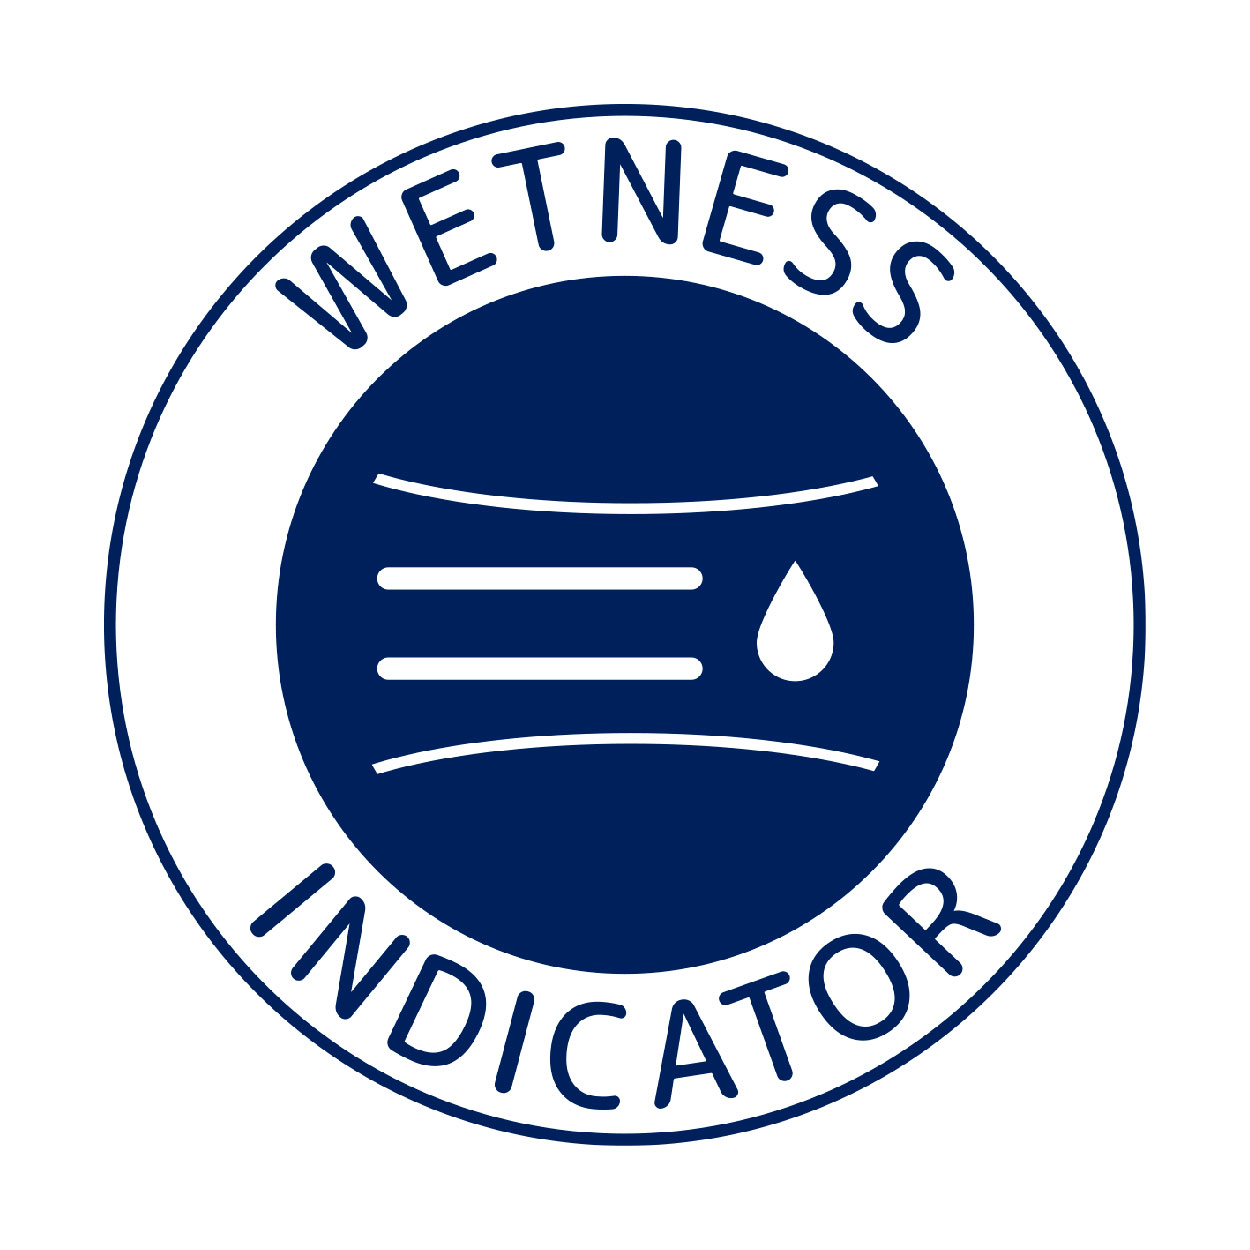 Wetness indicator